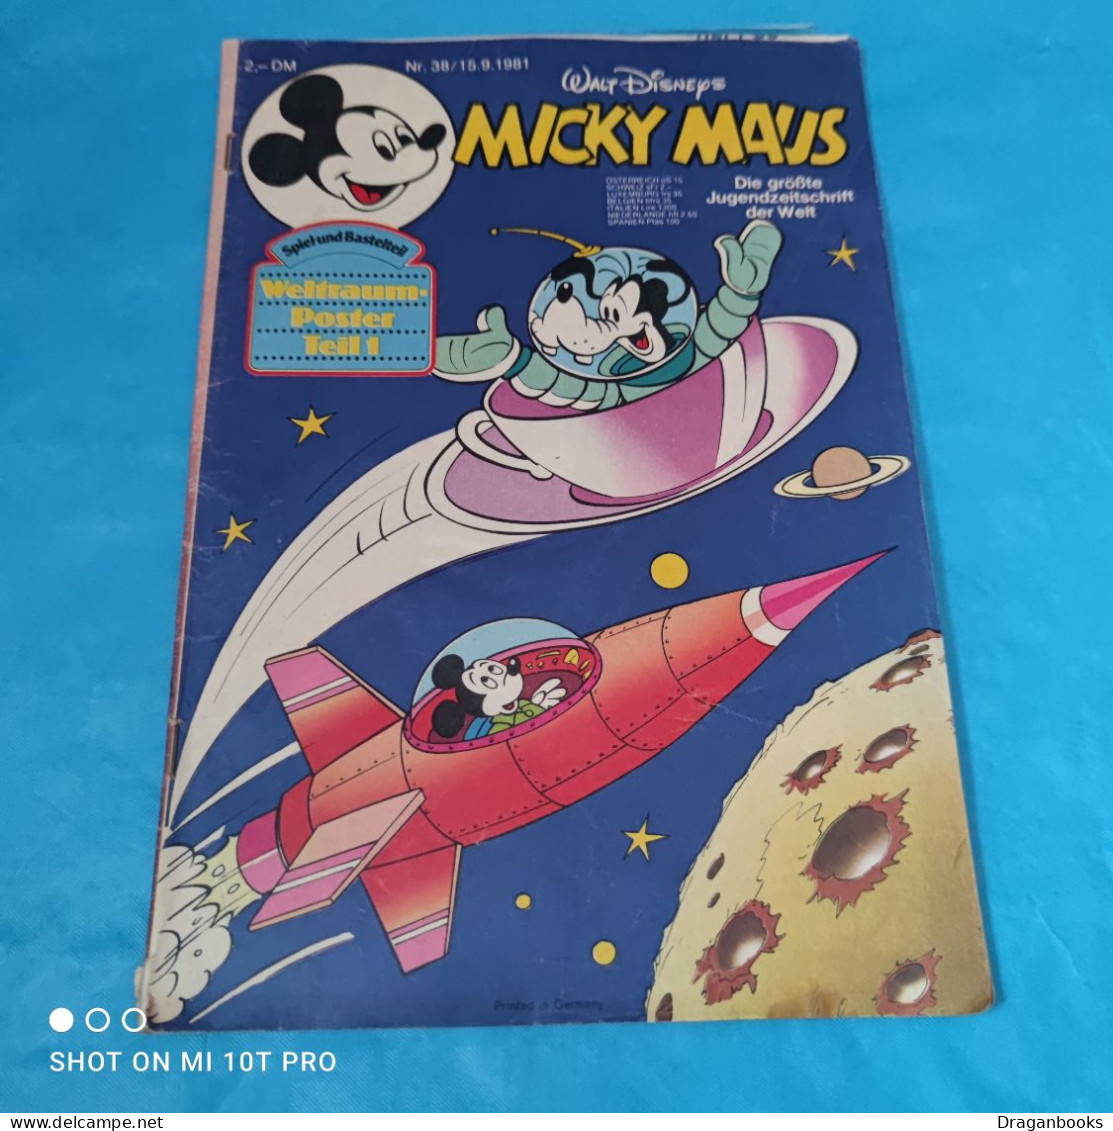 Micky Maus Nr. 38 - 15.9.1981 - Walt Disney